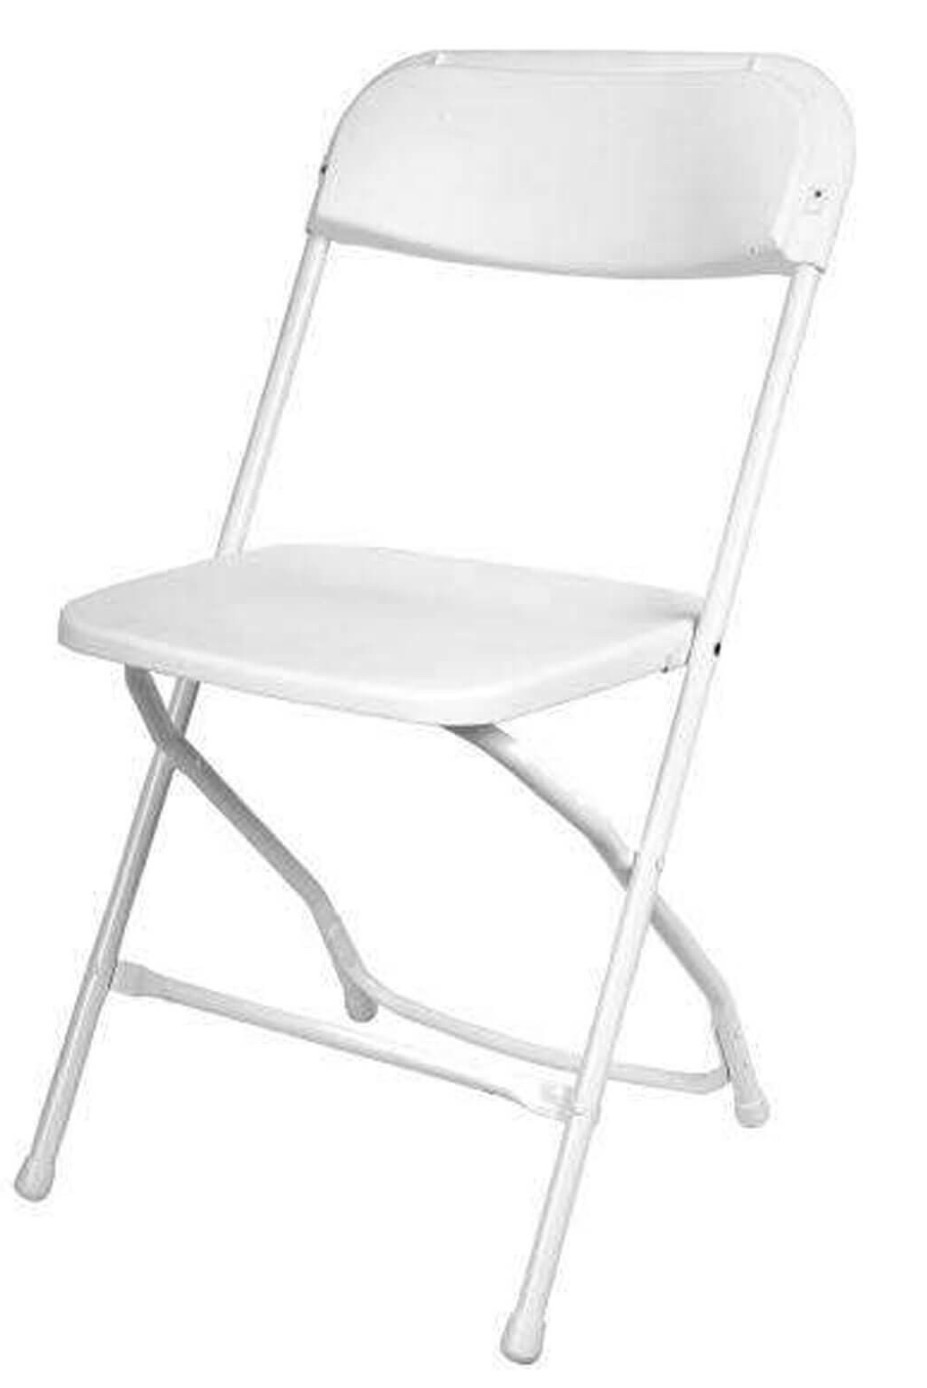 Plastic folding chair white